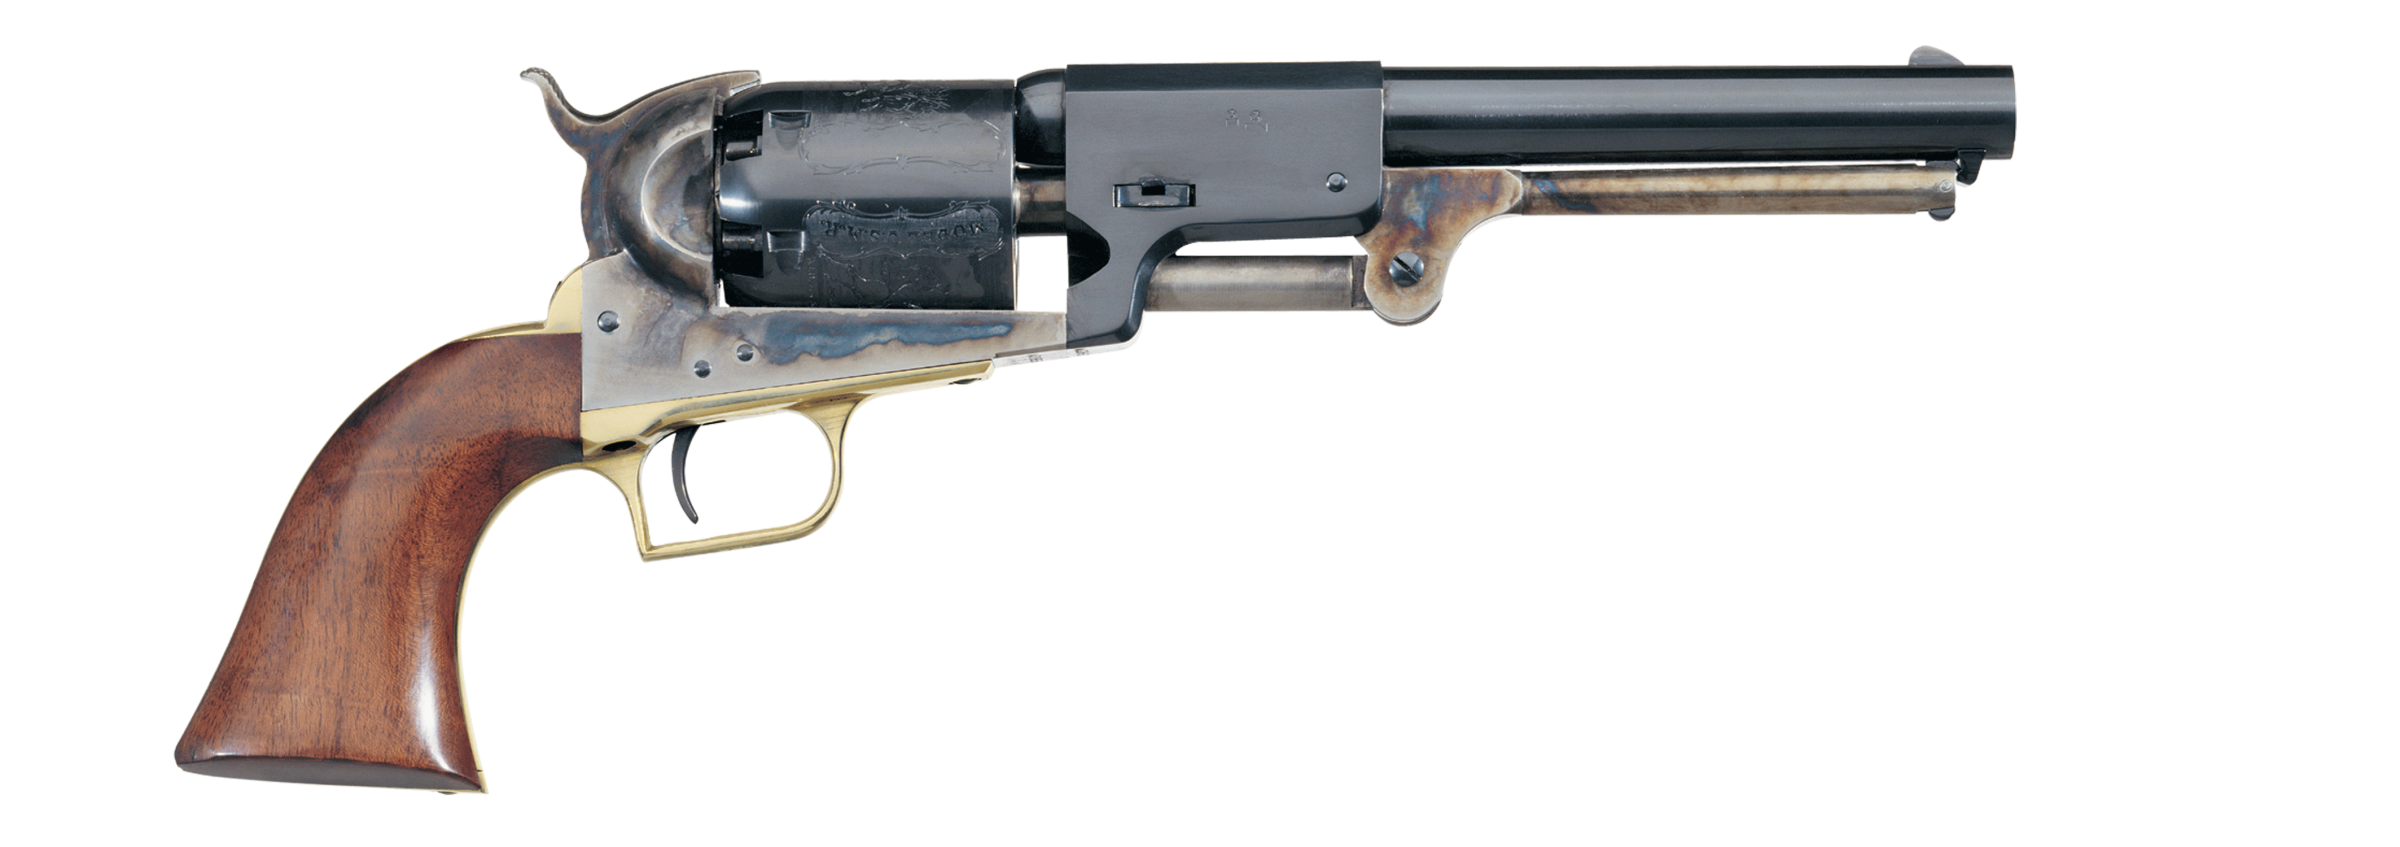 1851 Navy Engraved Black Powder Revolver 44 Caliber Brass Frame Walnut Grip  7.5 Inch Barrel by Traditions